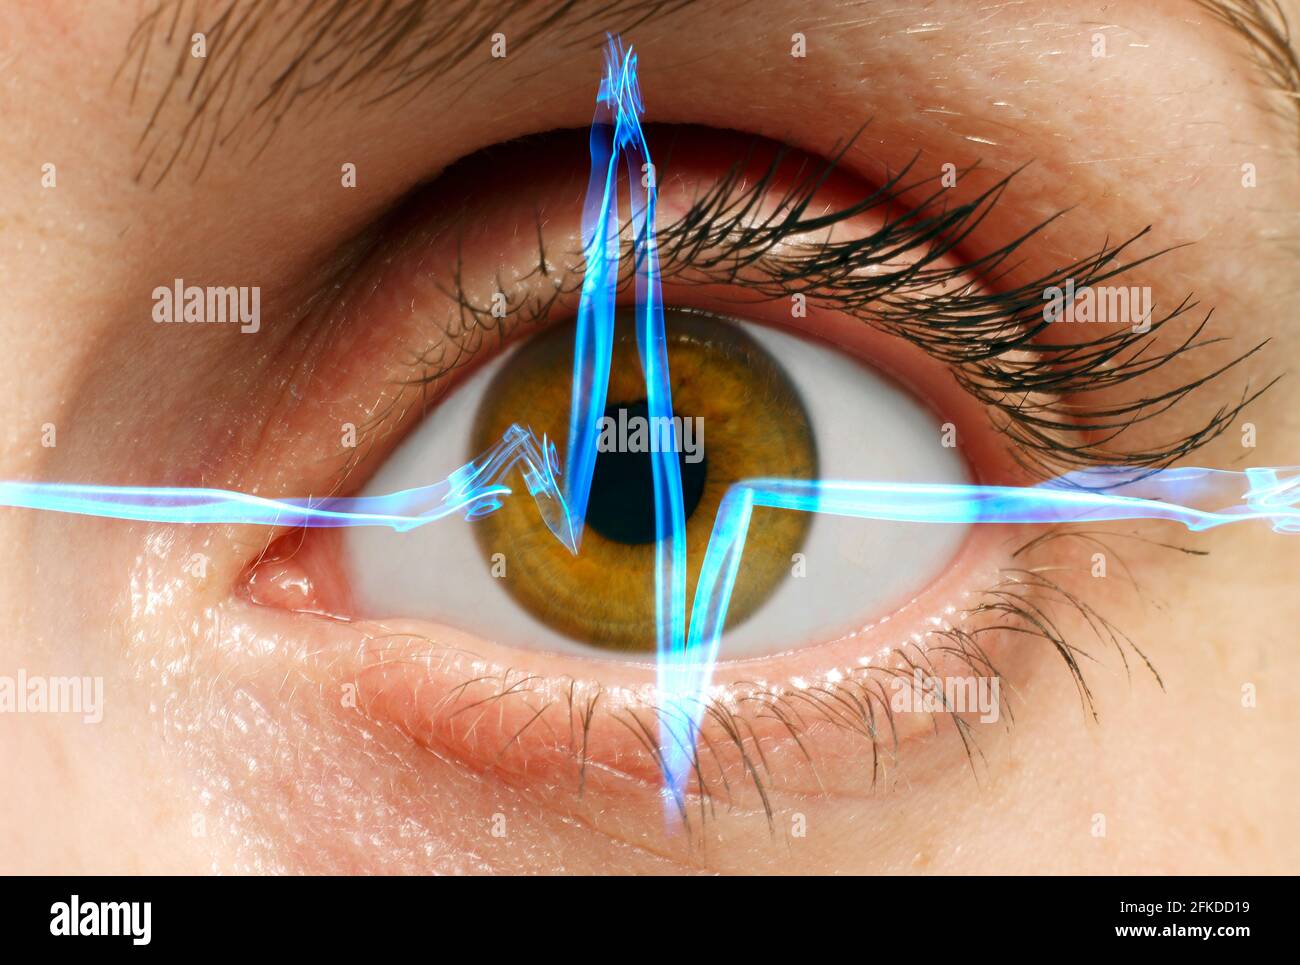 Human eye and electrocardiogram, conceptual composite image Stock Photo